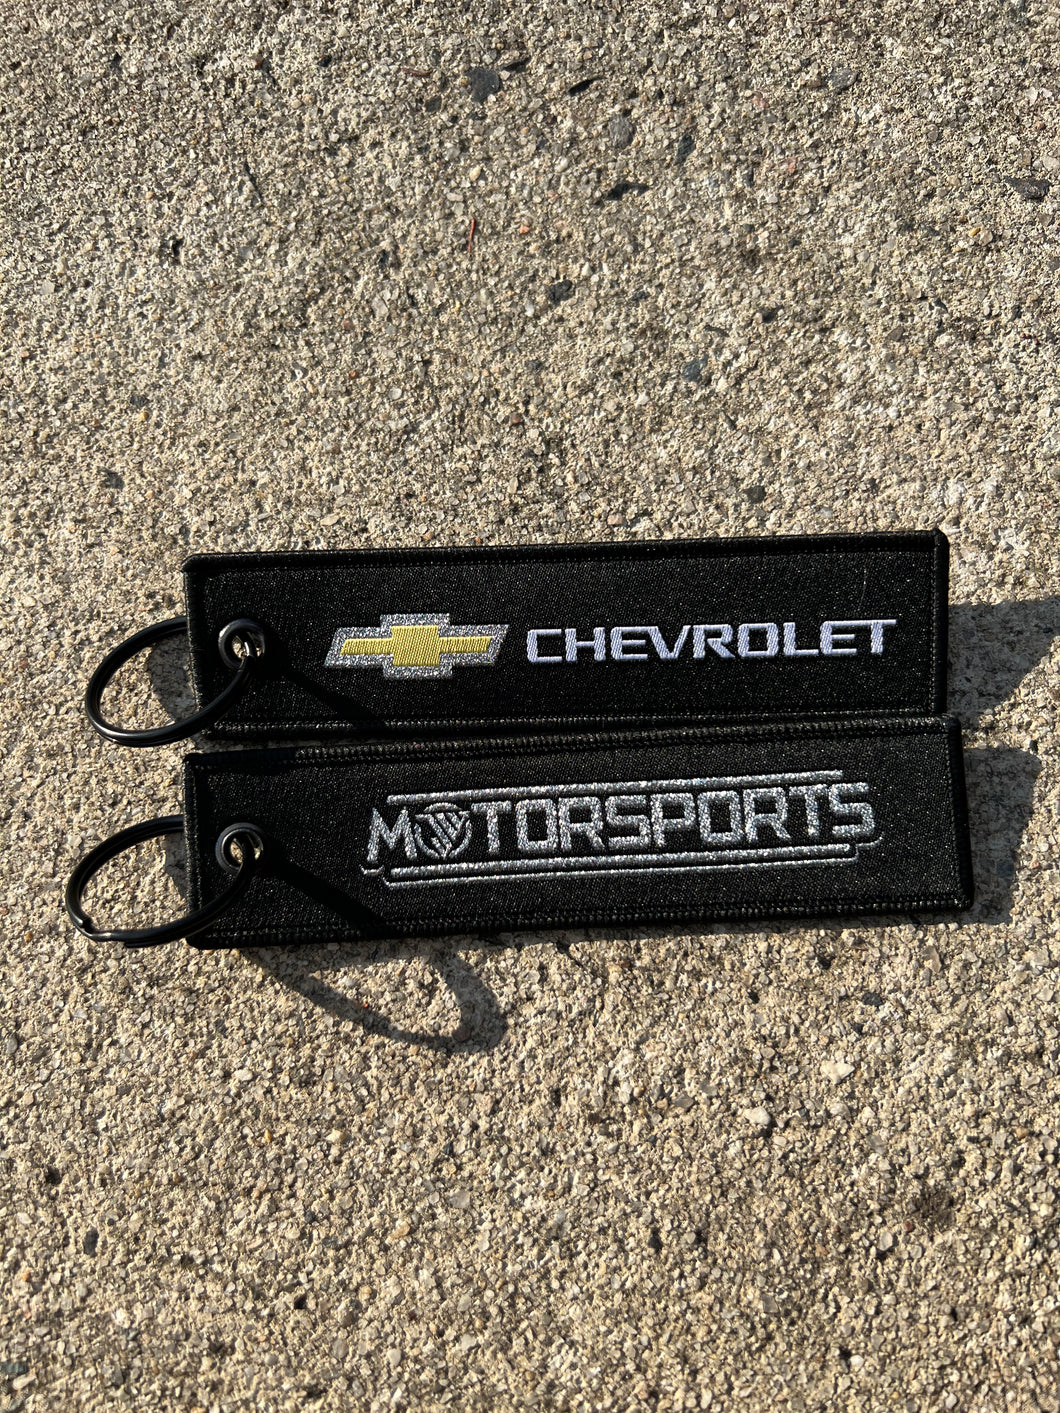 Chevy Key Tag | JW MOTORSPORTS